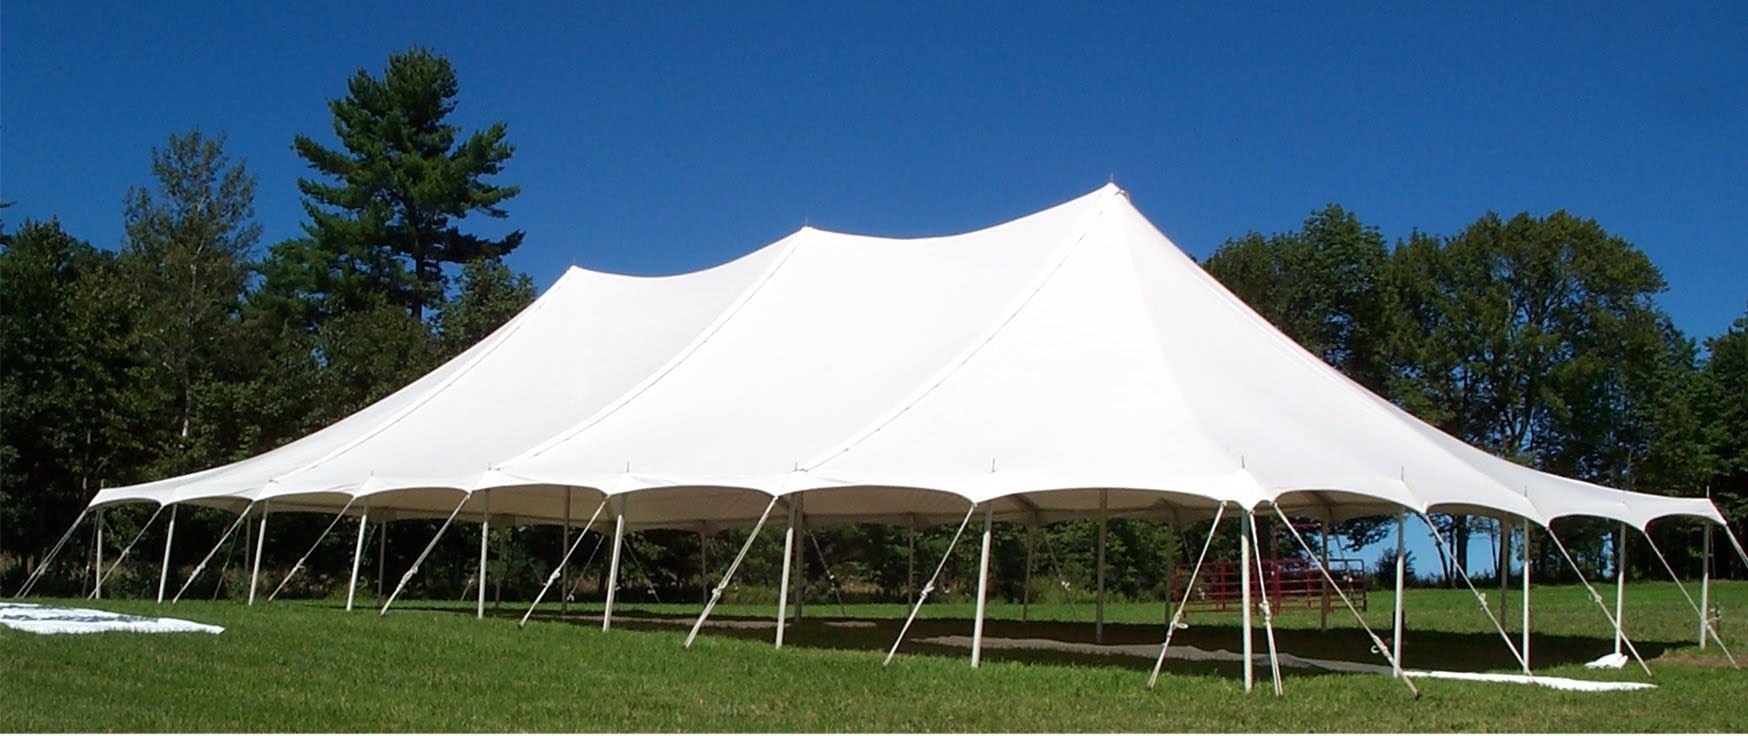 Uithoudingsvermogen Recyclen etiquette Party Tents For Sale - VisualHunt